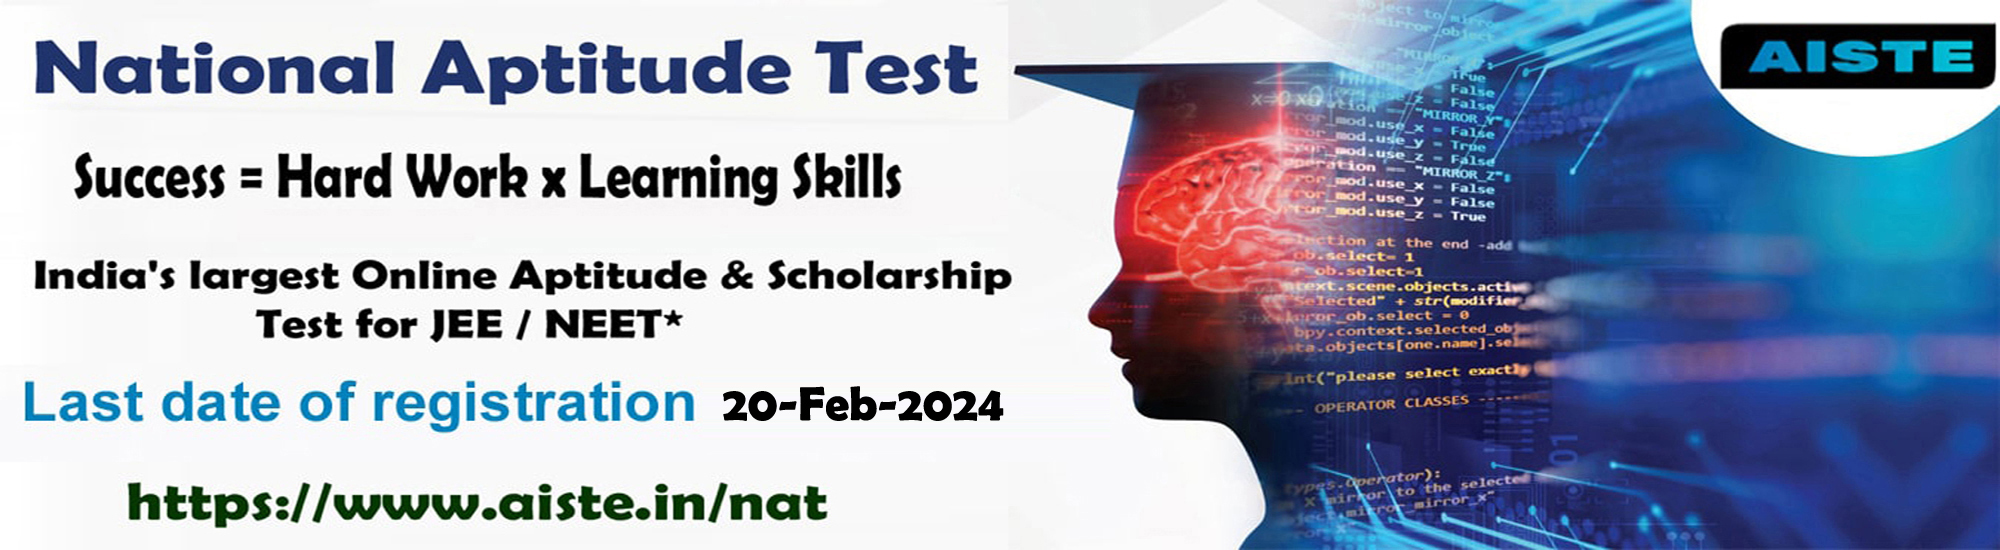 national scholarship Test Exam NST